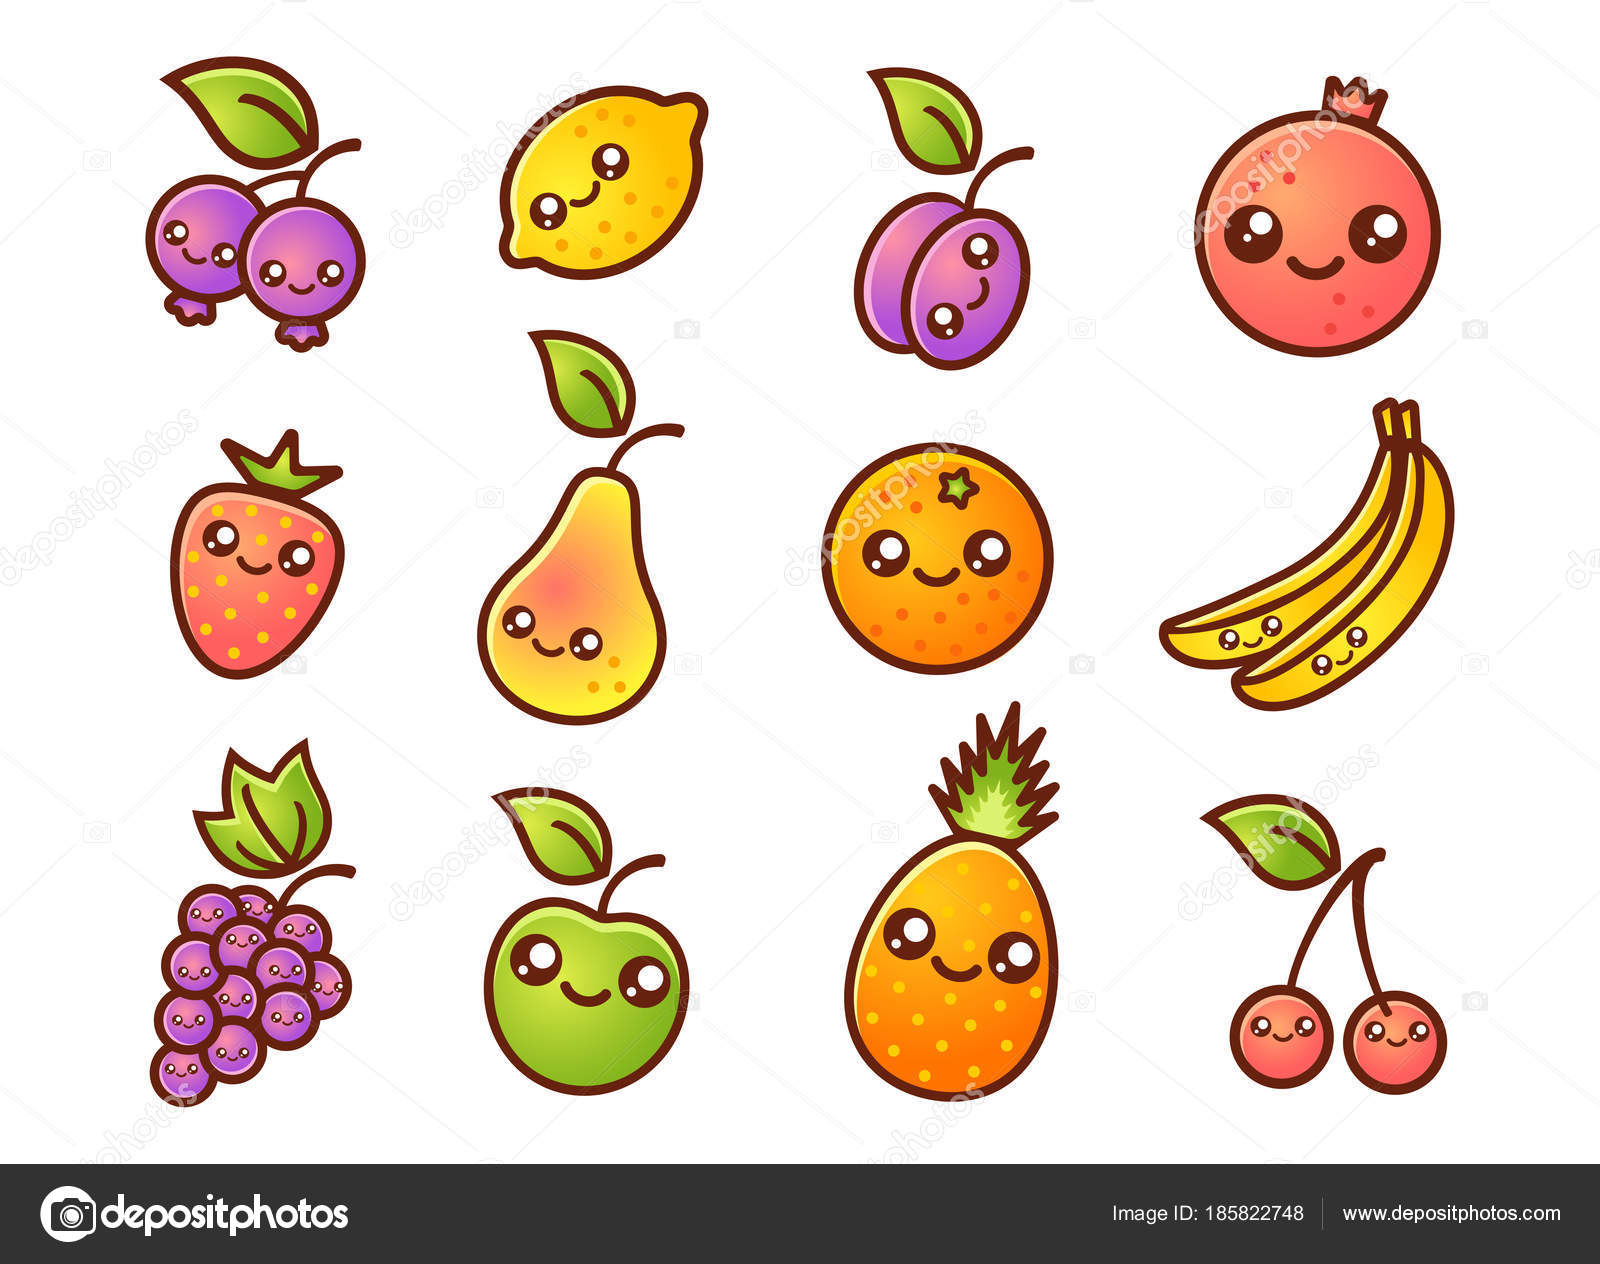 18,645 ilustraciones de stock de Fruta kawaii | Depositphotos®